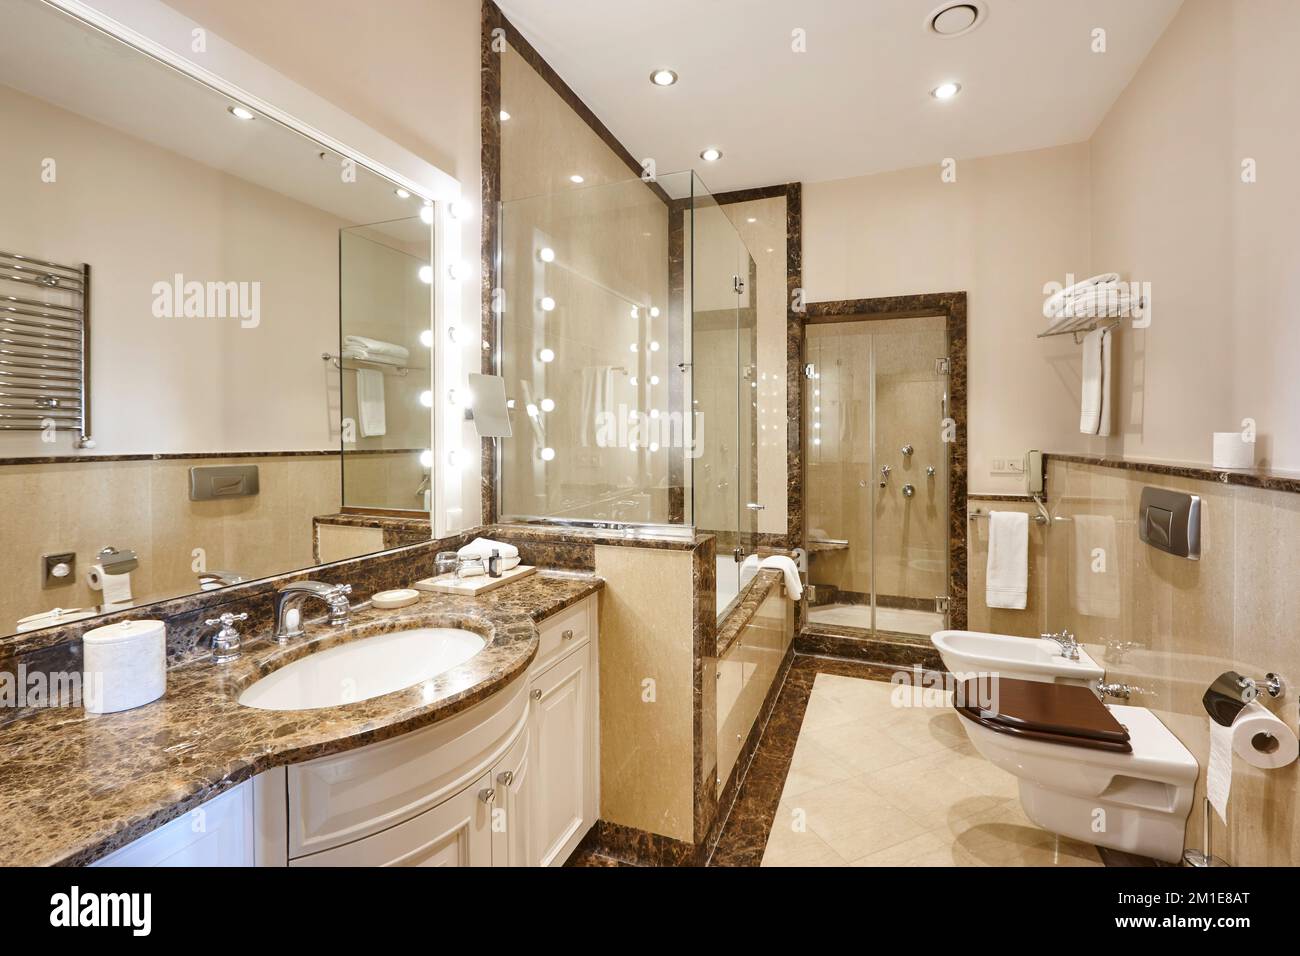 Luxury bathroom finished in marble. Classic and elegant decoration. Nodody Stock Photo